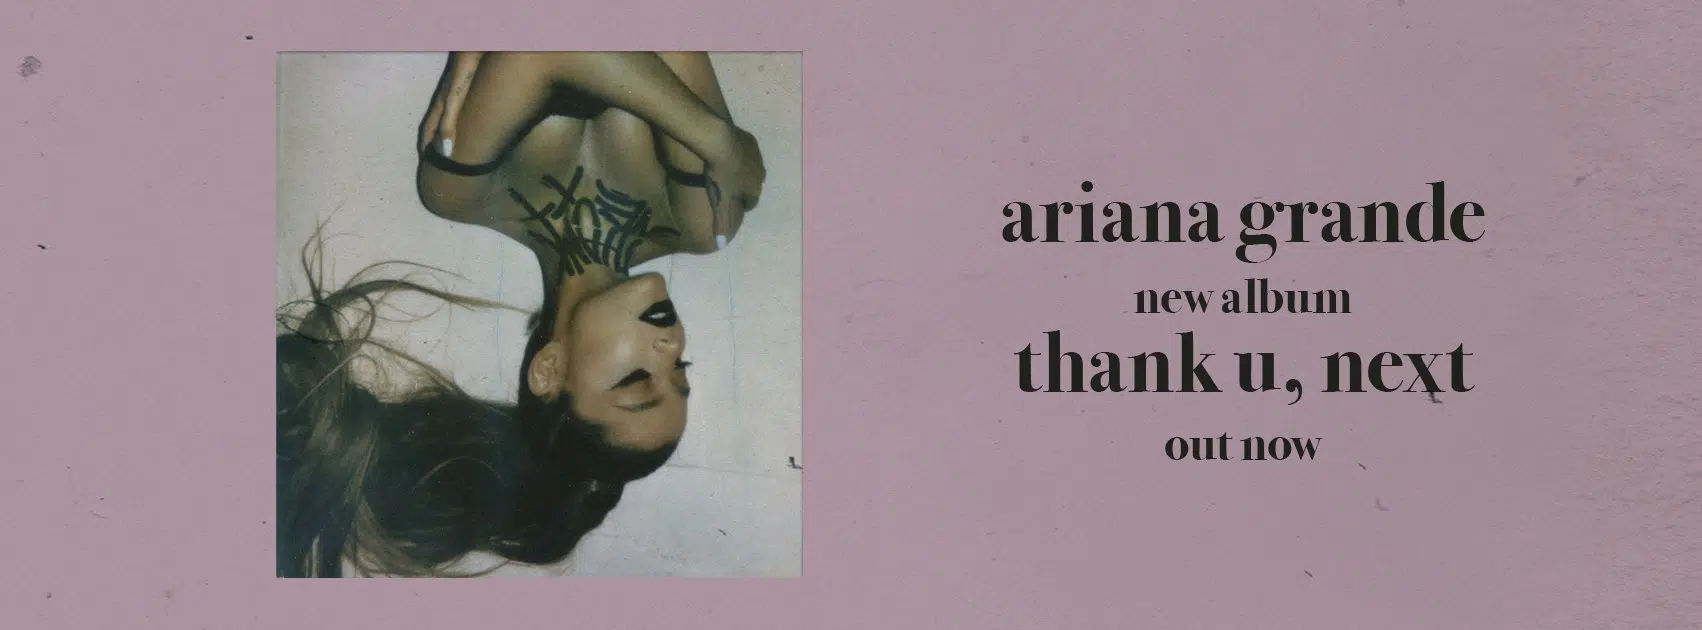 Ariana Grande Trademarks "Thank U, Next"